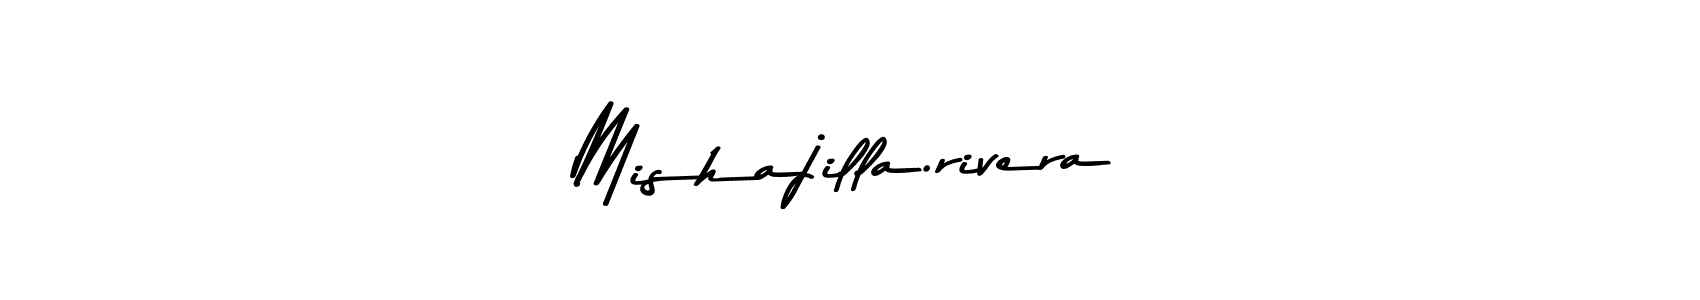 Make a beautiful signature design for name Mishajilla.rivera. Use this online signature maker to create a handwritten signature for free. Mishajilla.rivera signature style 9 images and pictures png